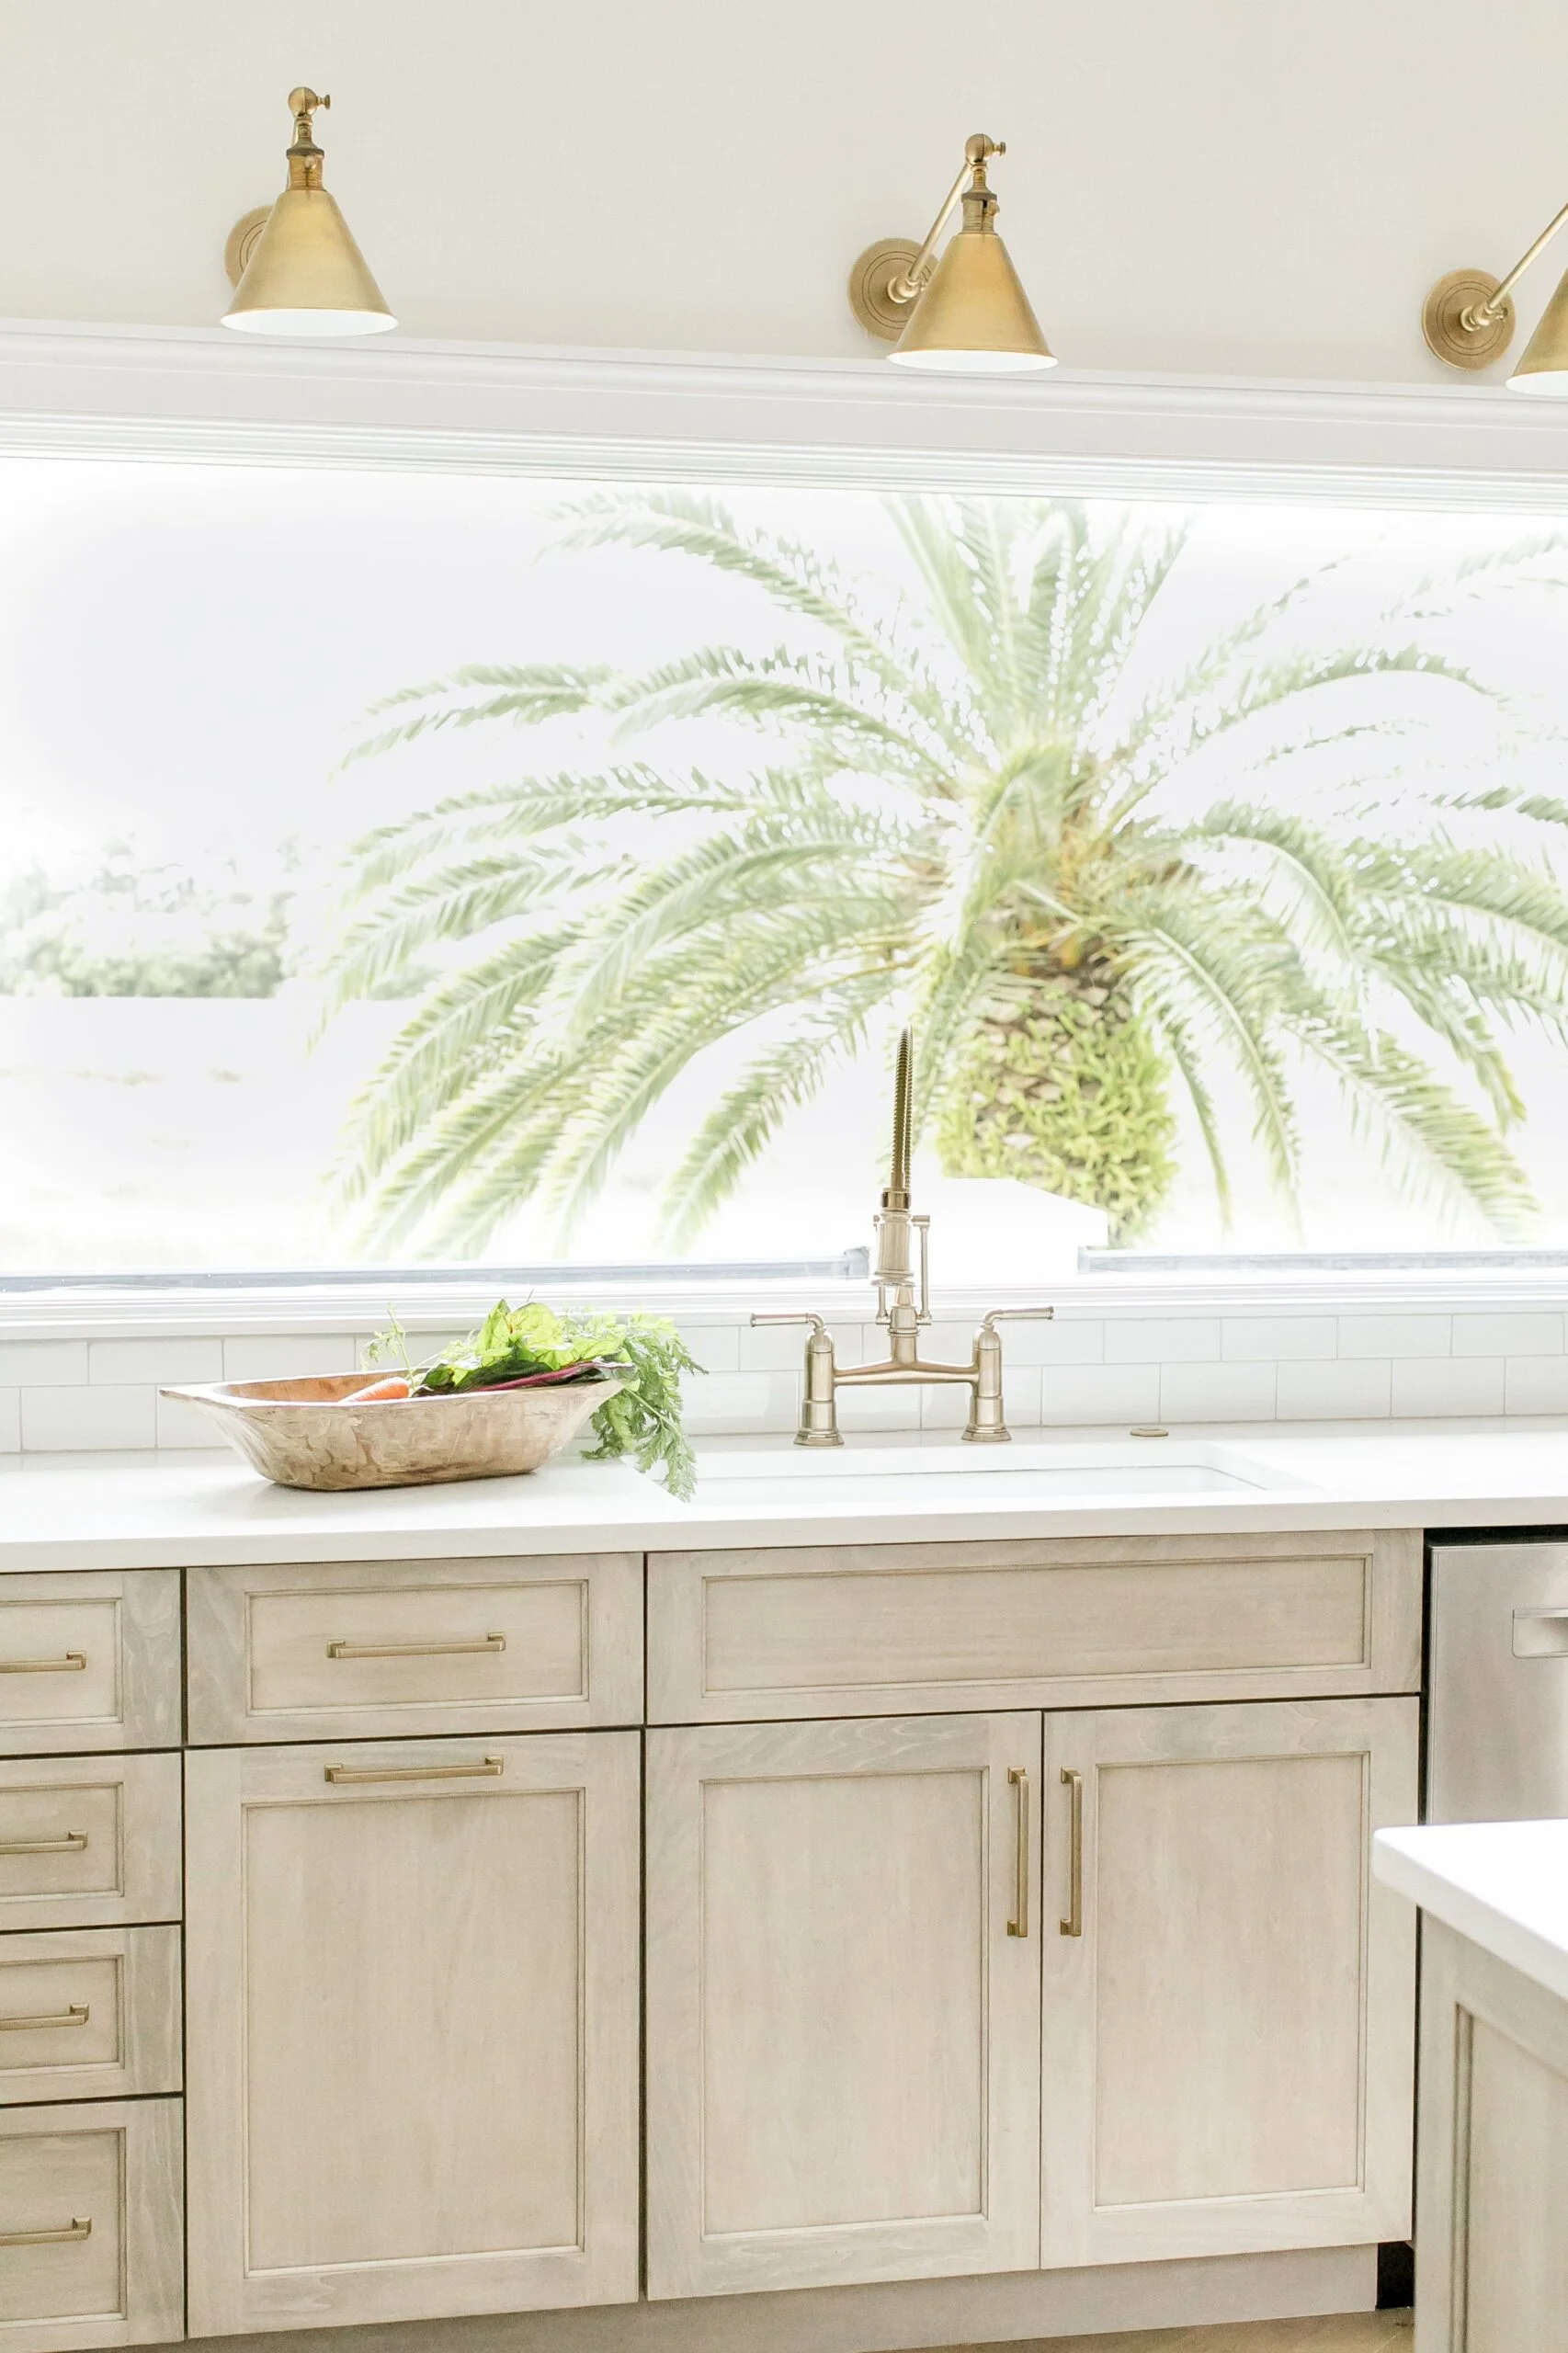 Tan kitchen with window